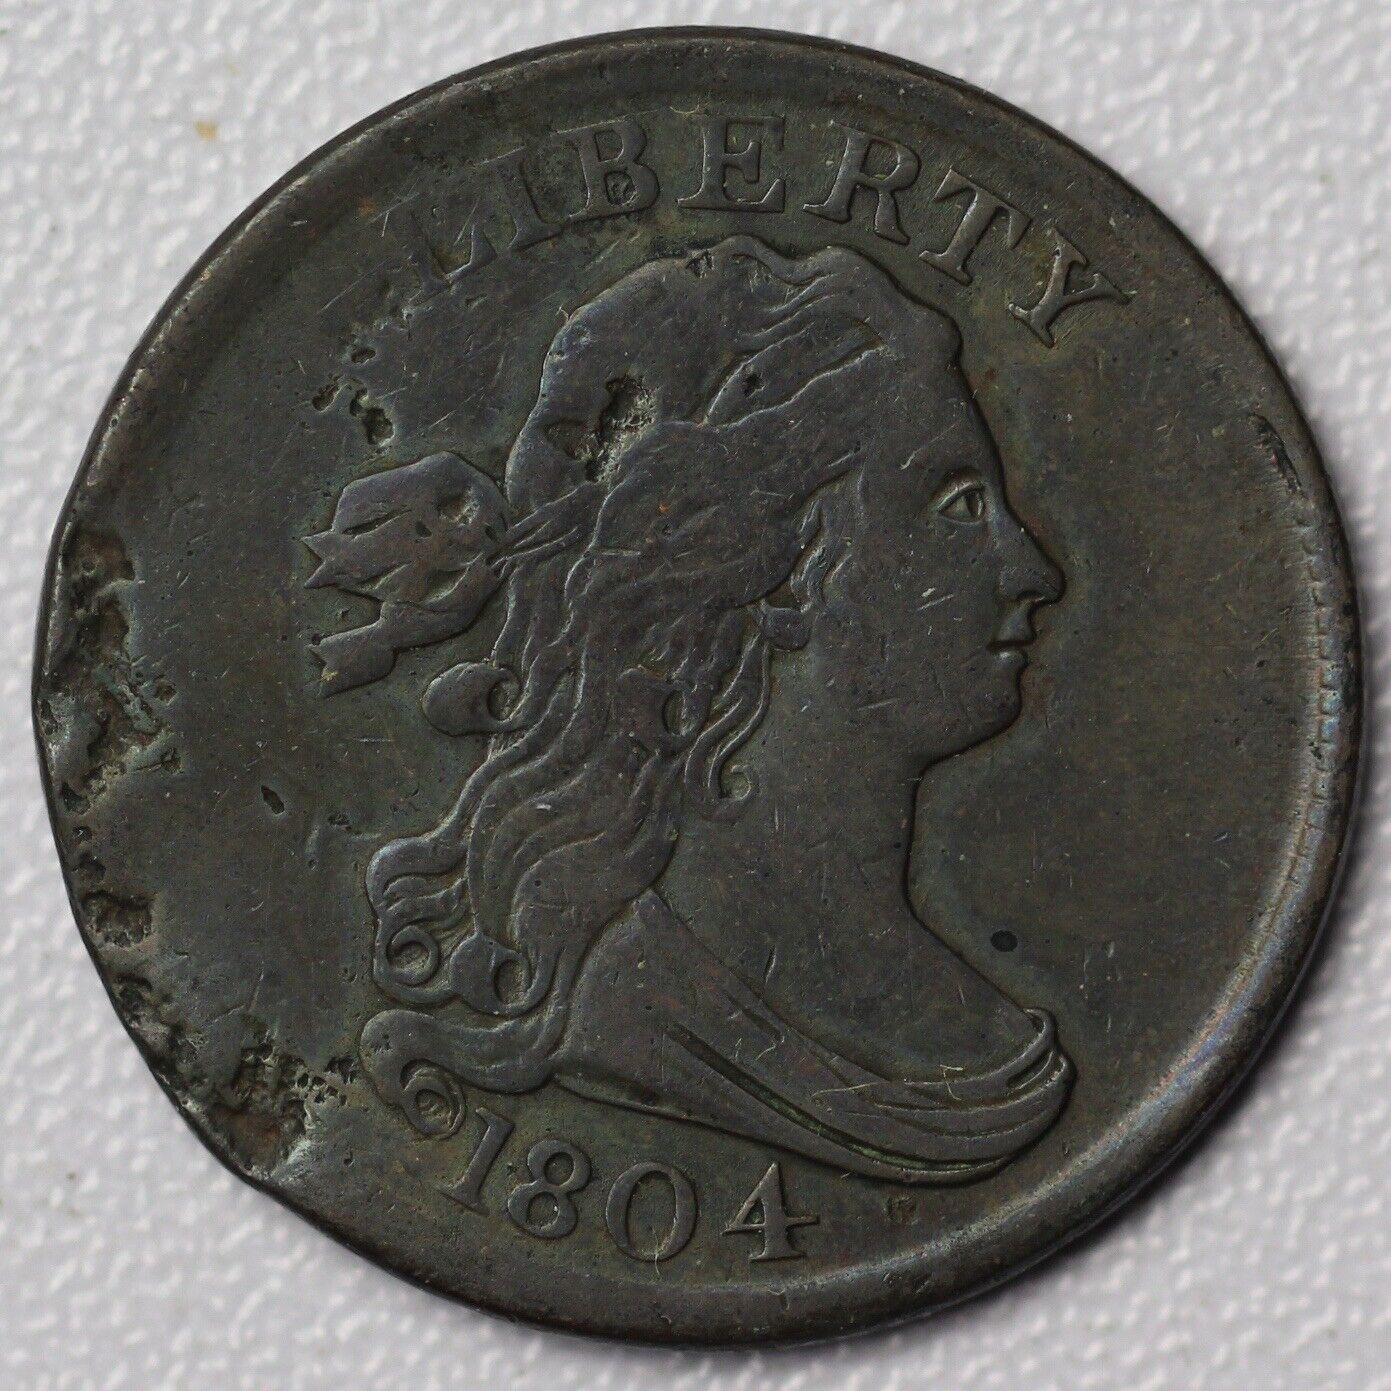 1804 Draped Bust Half Cent - VF Details